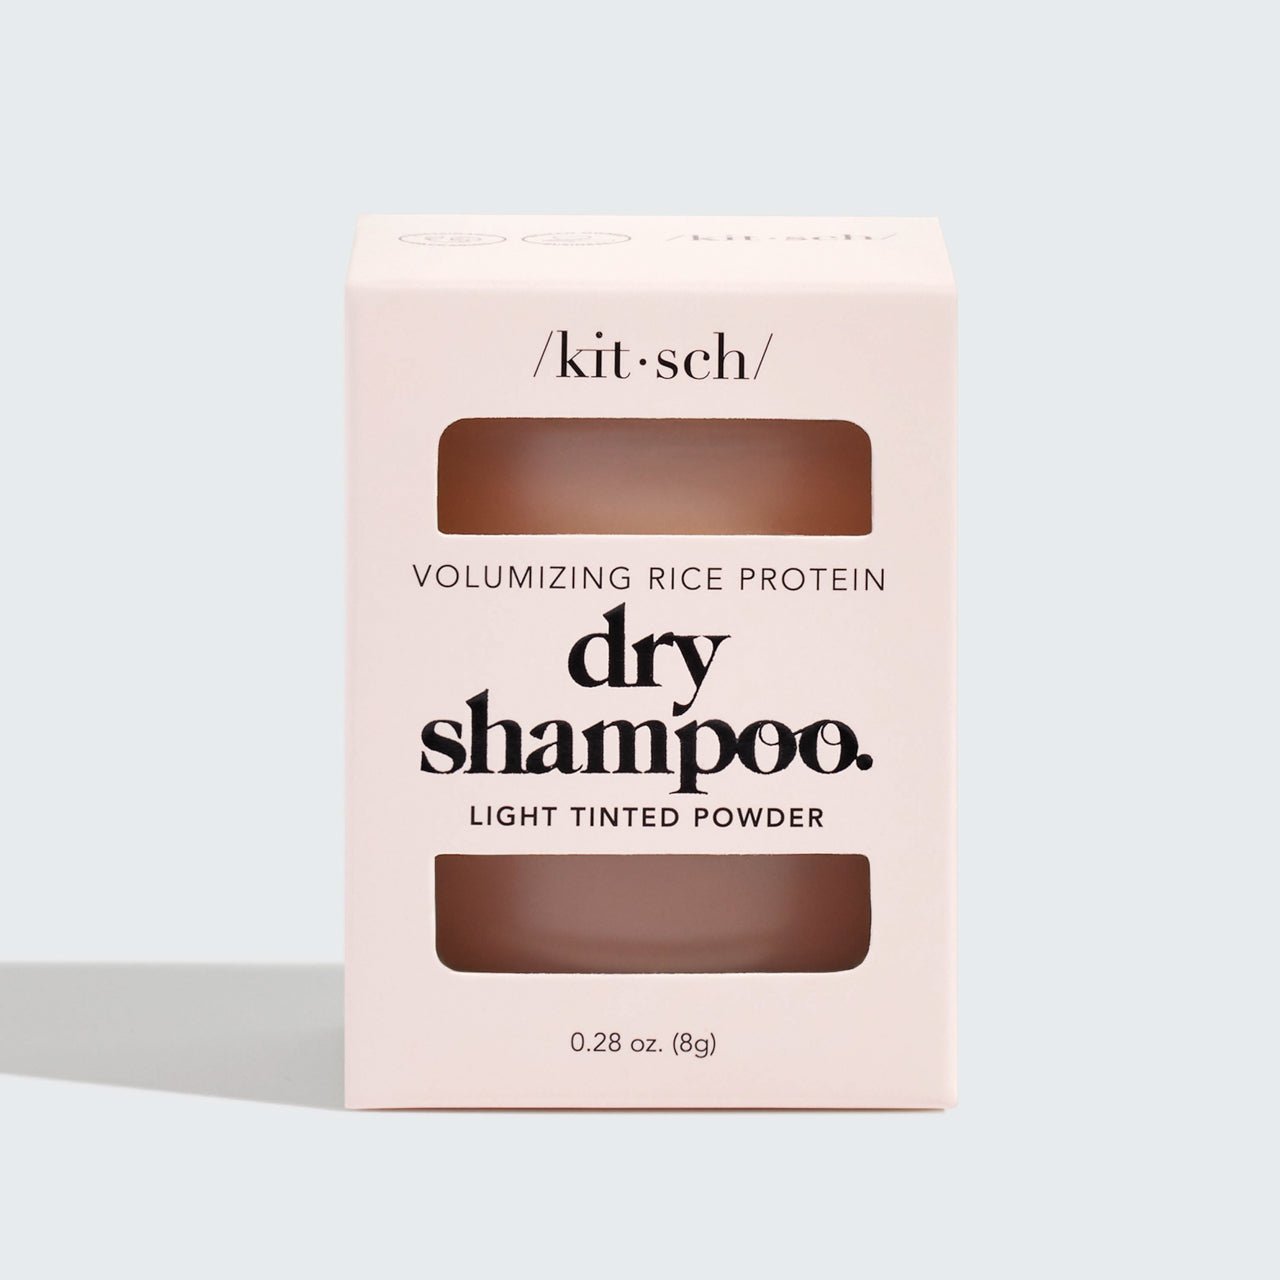 Volumizing Rice Protein Dry Shampoo